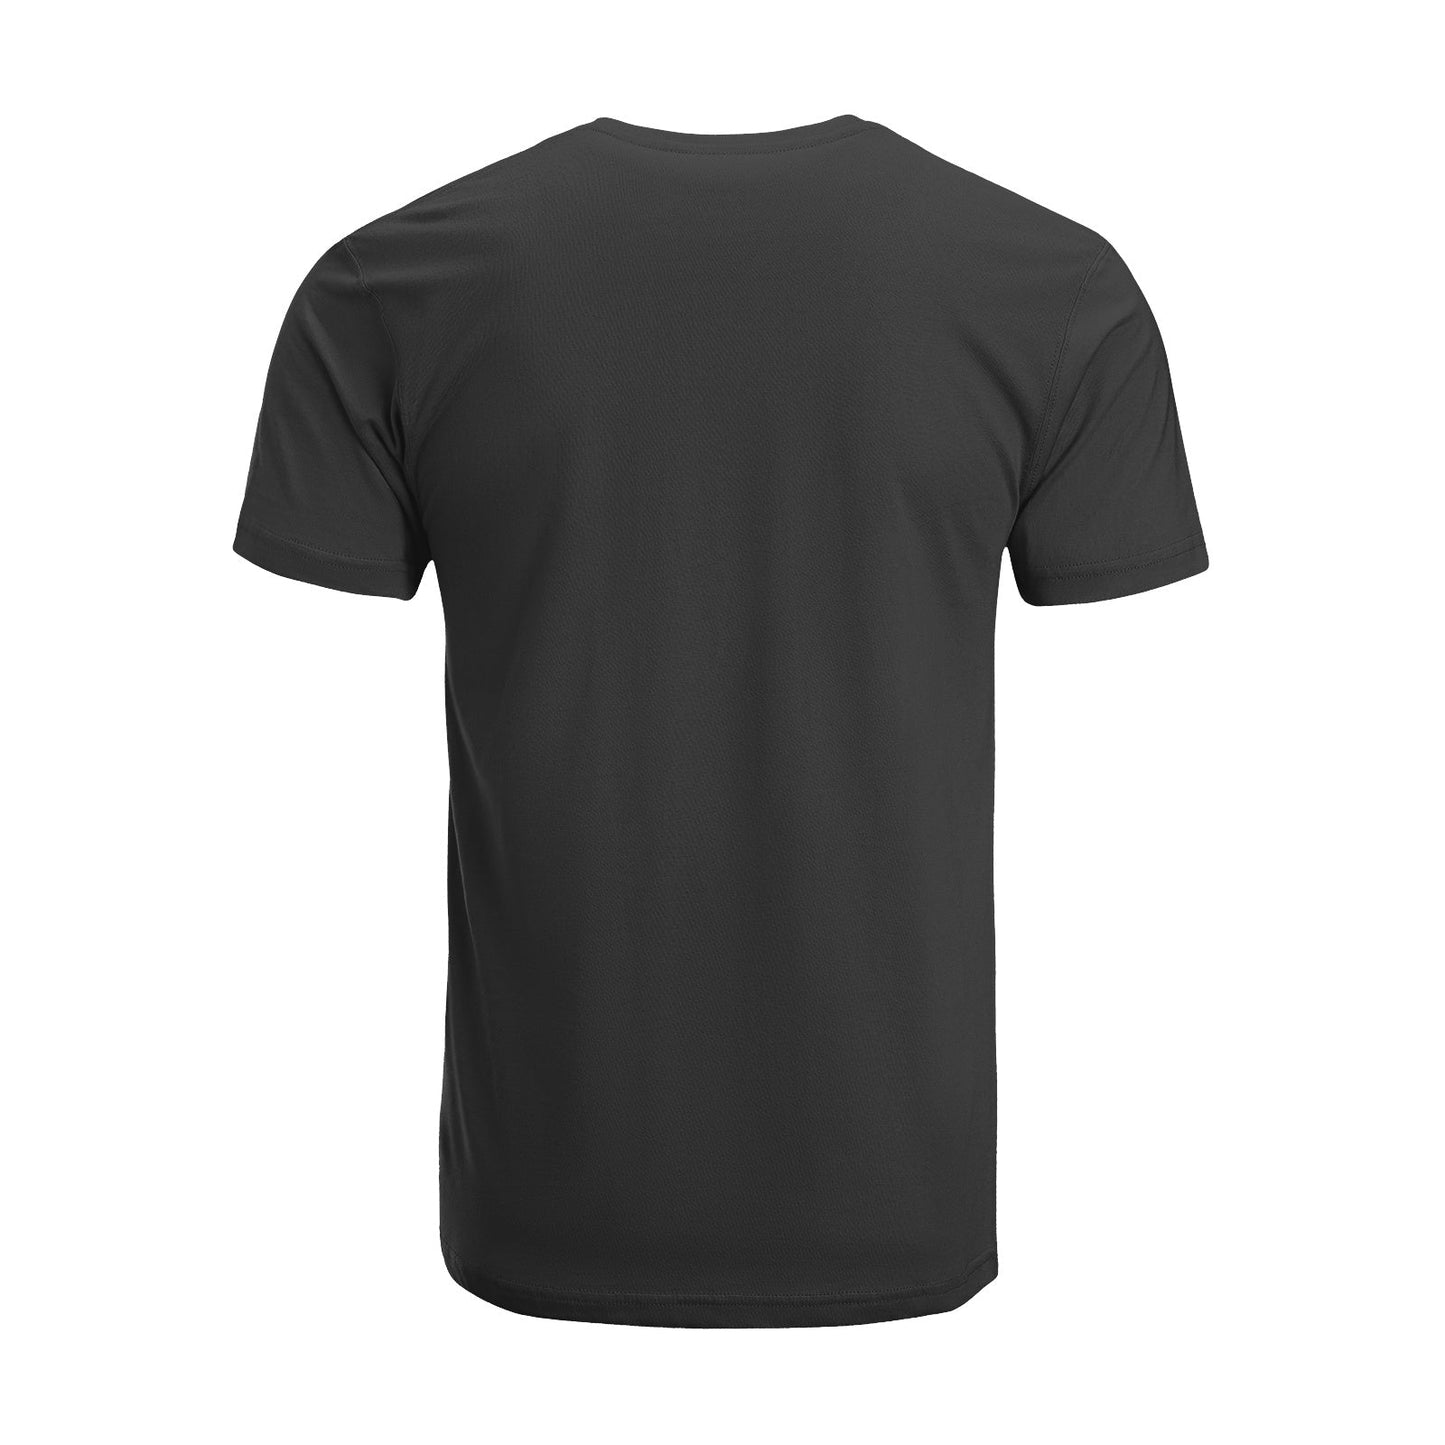 Unisex Short Sleeve Crew Neck Cotton Jersey T-Shirt VEGAN 19